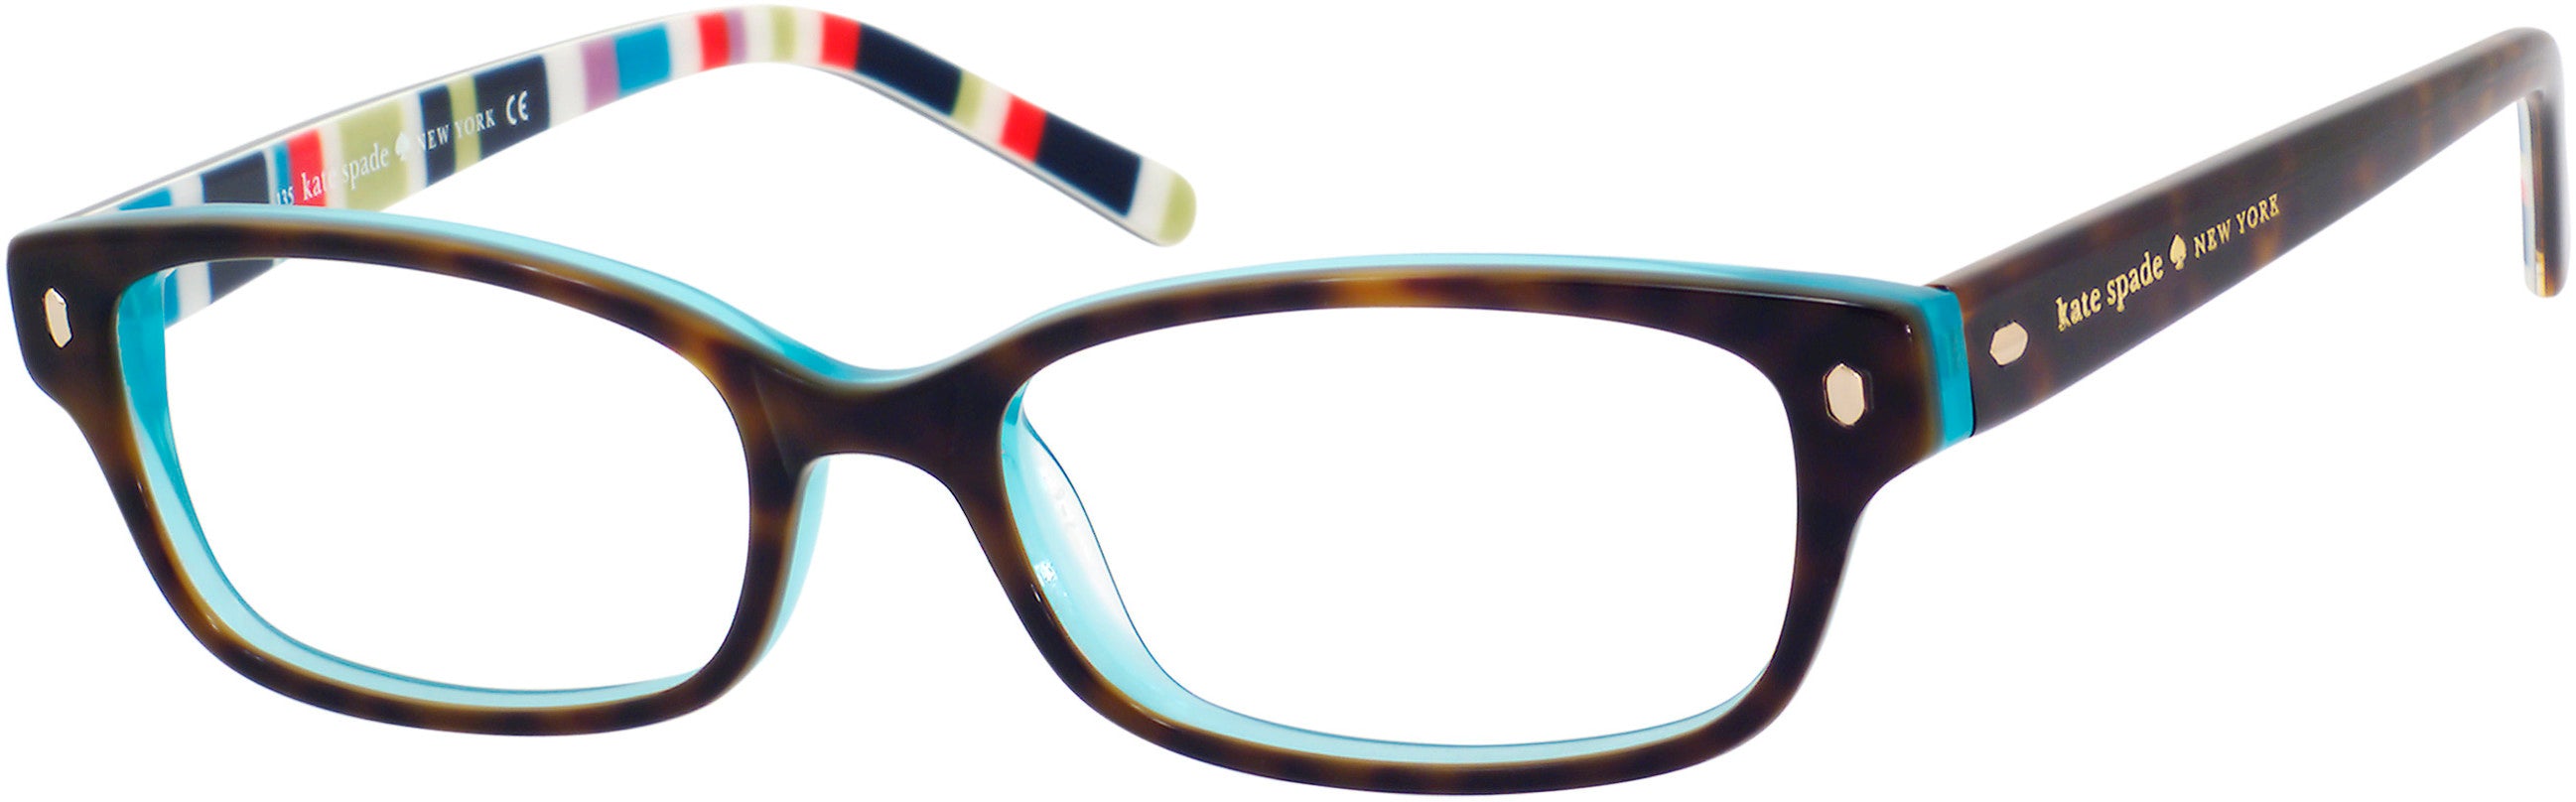 Kate Spade Lucyann Us Rectangular Eyeglasses 0X77-0X77  Tortoise Aqua Striped (00 Demo Lens)